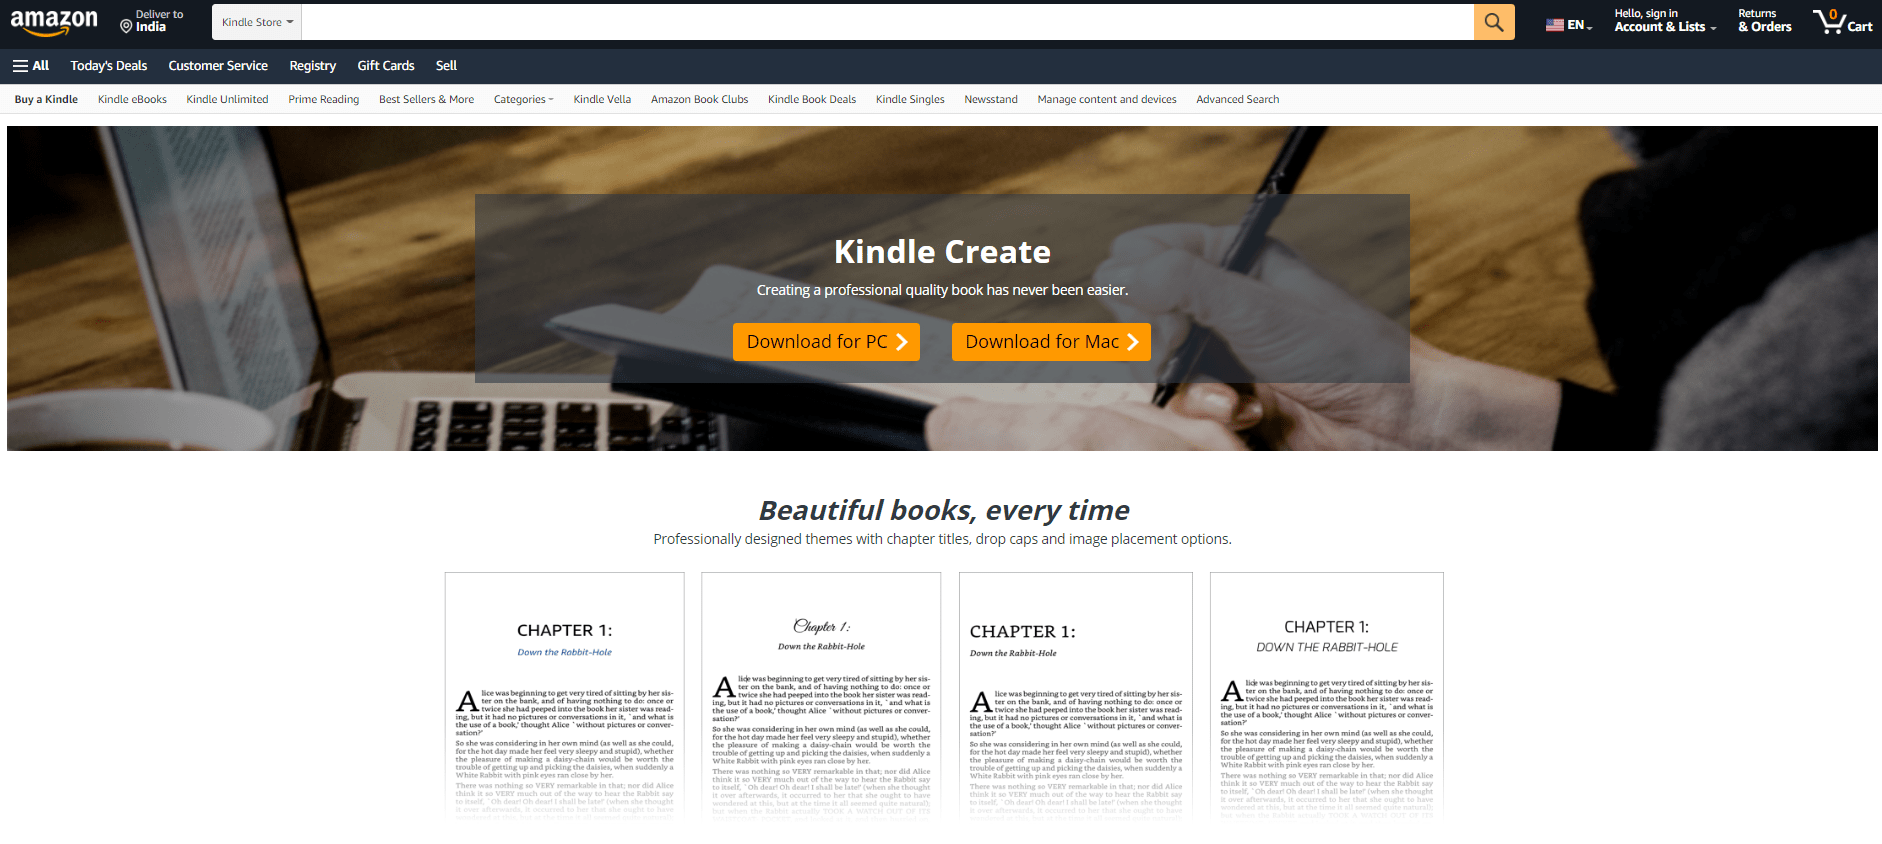 Amazon's Kindle Create Overview